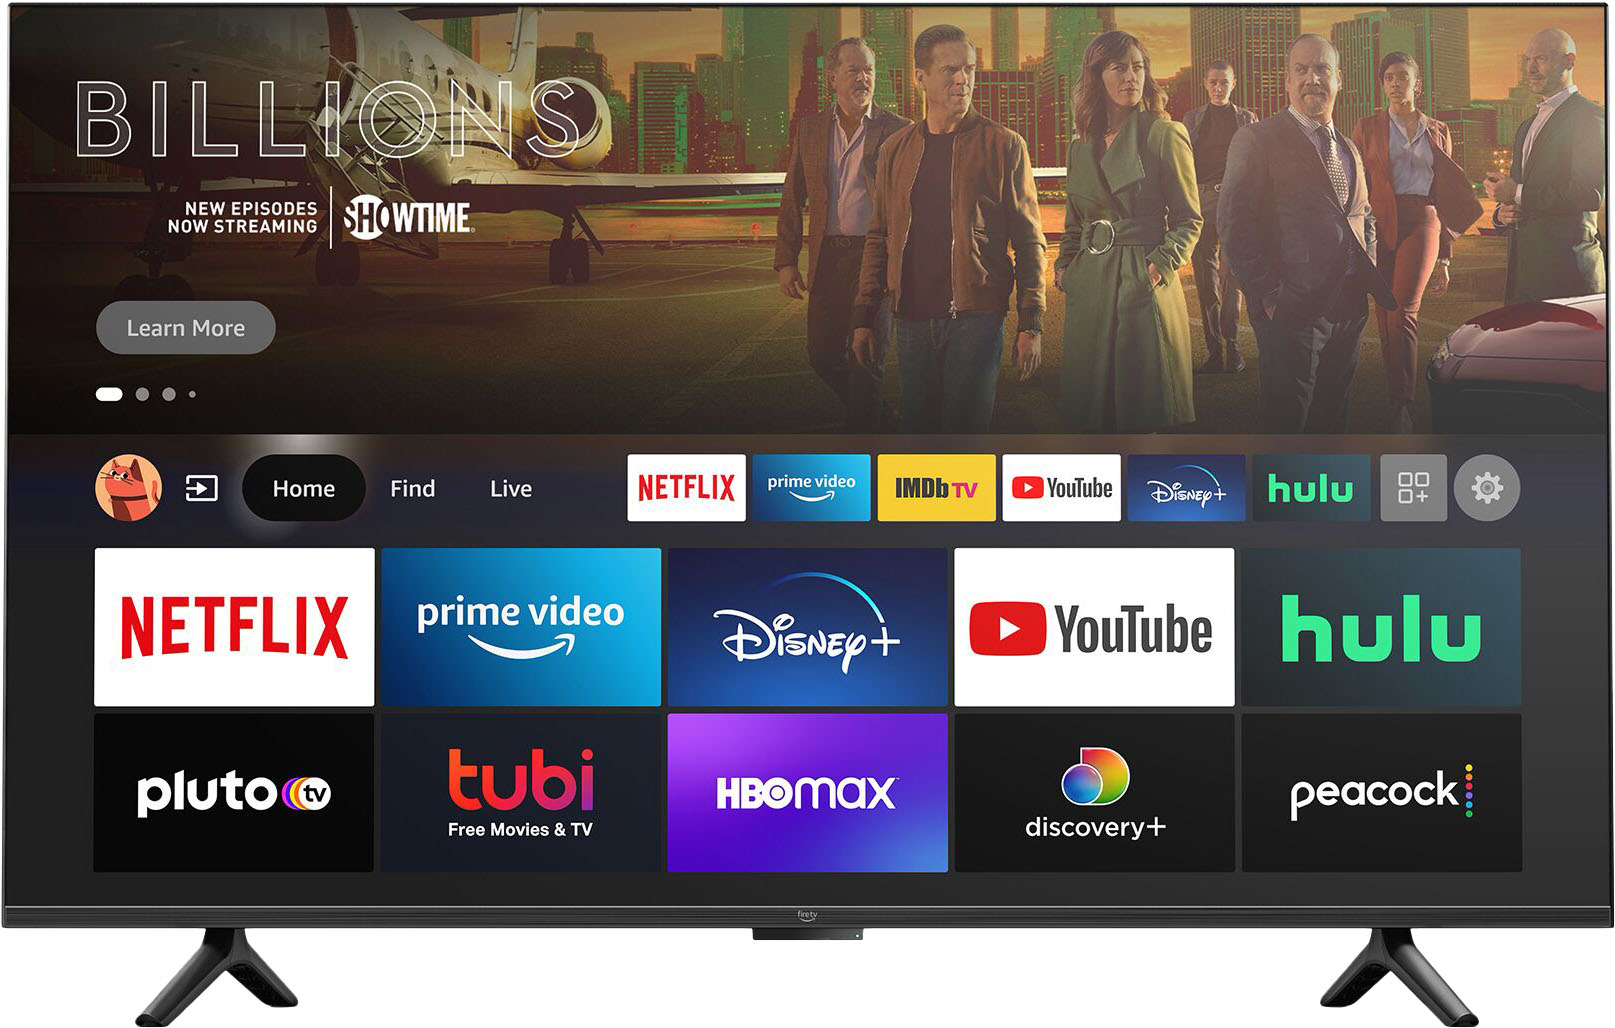 Amazon Fire TV 55" Omni Series 4K UHD smart TV, hands-free with Alexa $299